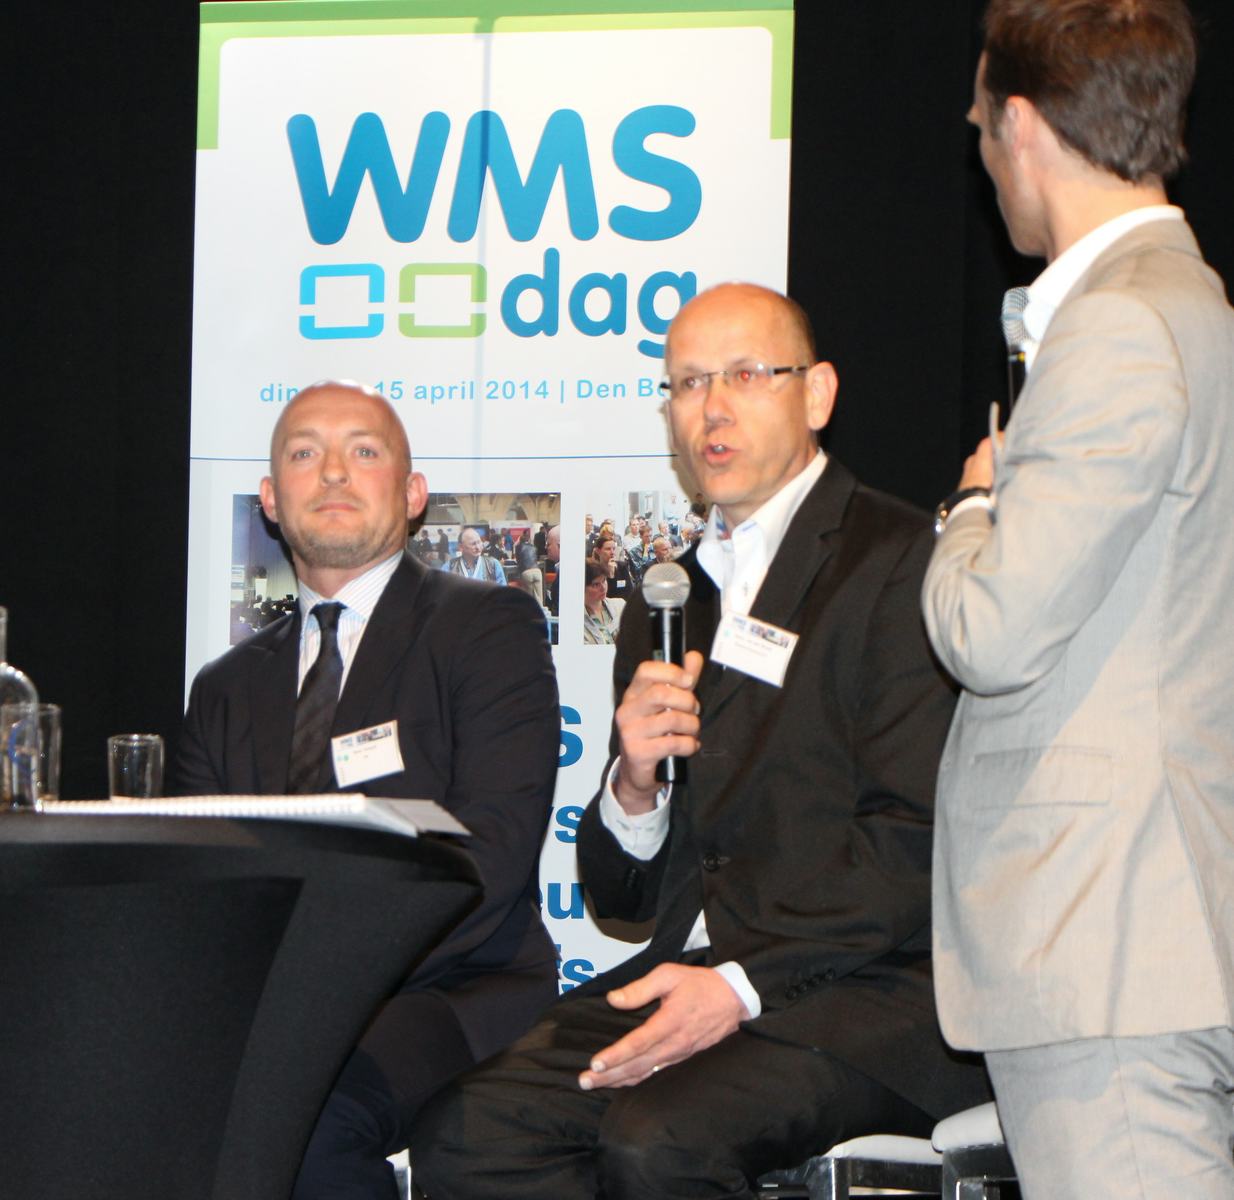 WMS-dag 2014: connectiviteit boven functionaliteit